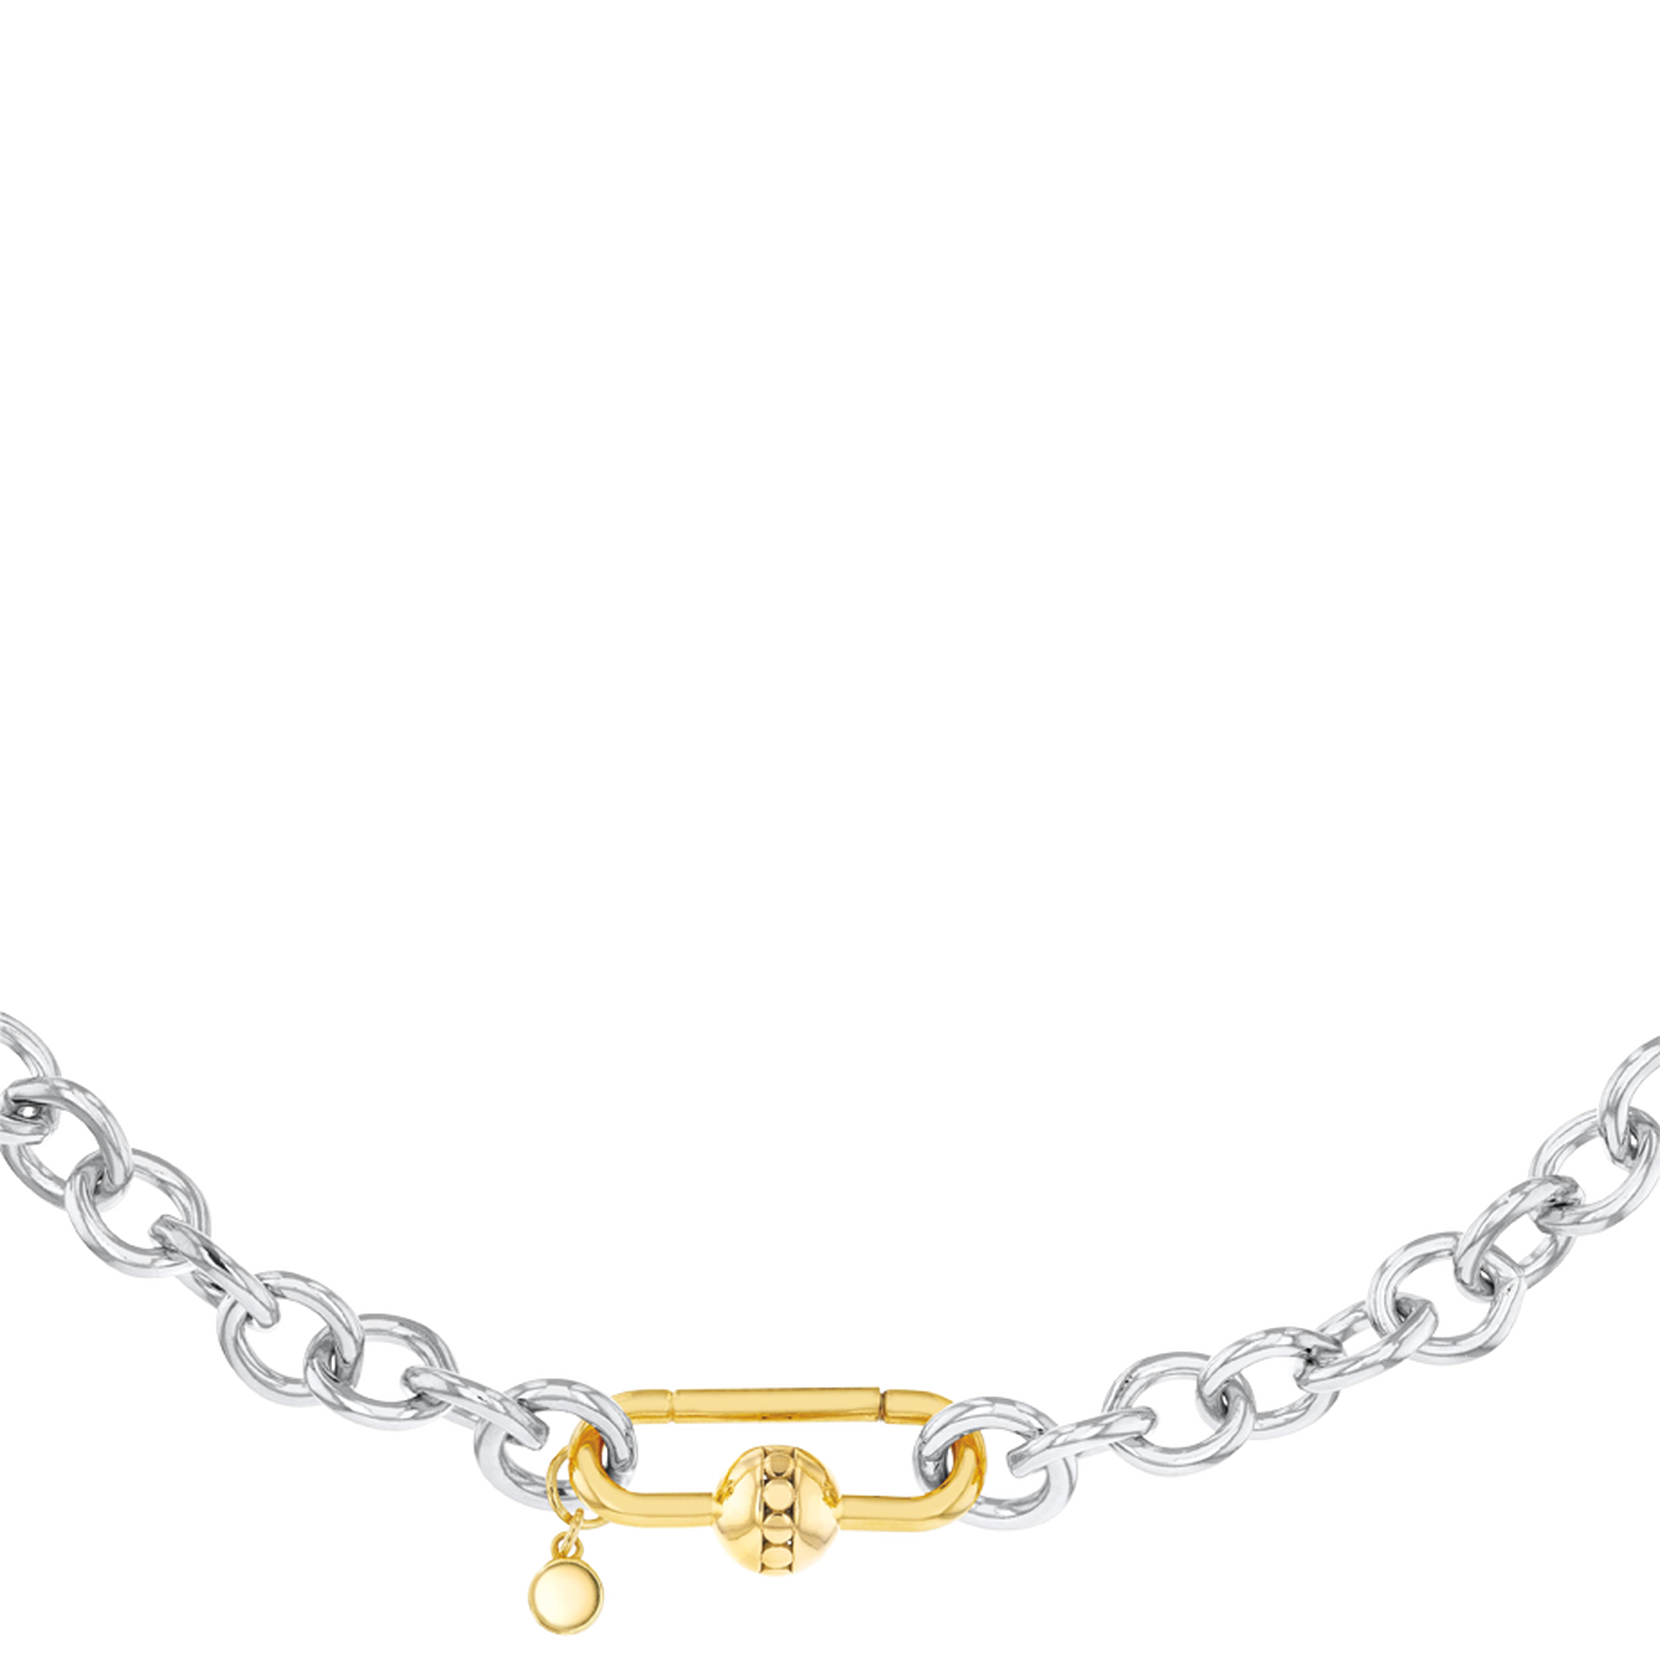 Chain Choker Choker With Padlock Chain Necklace Men Chain 